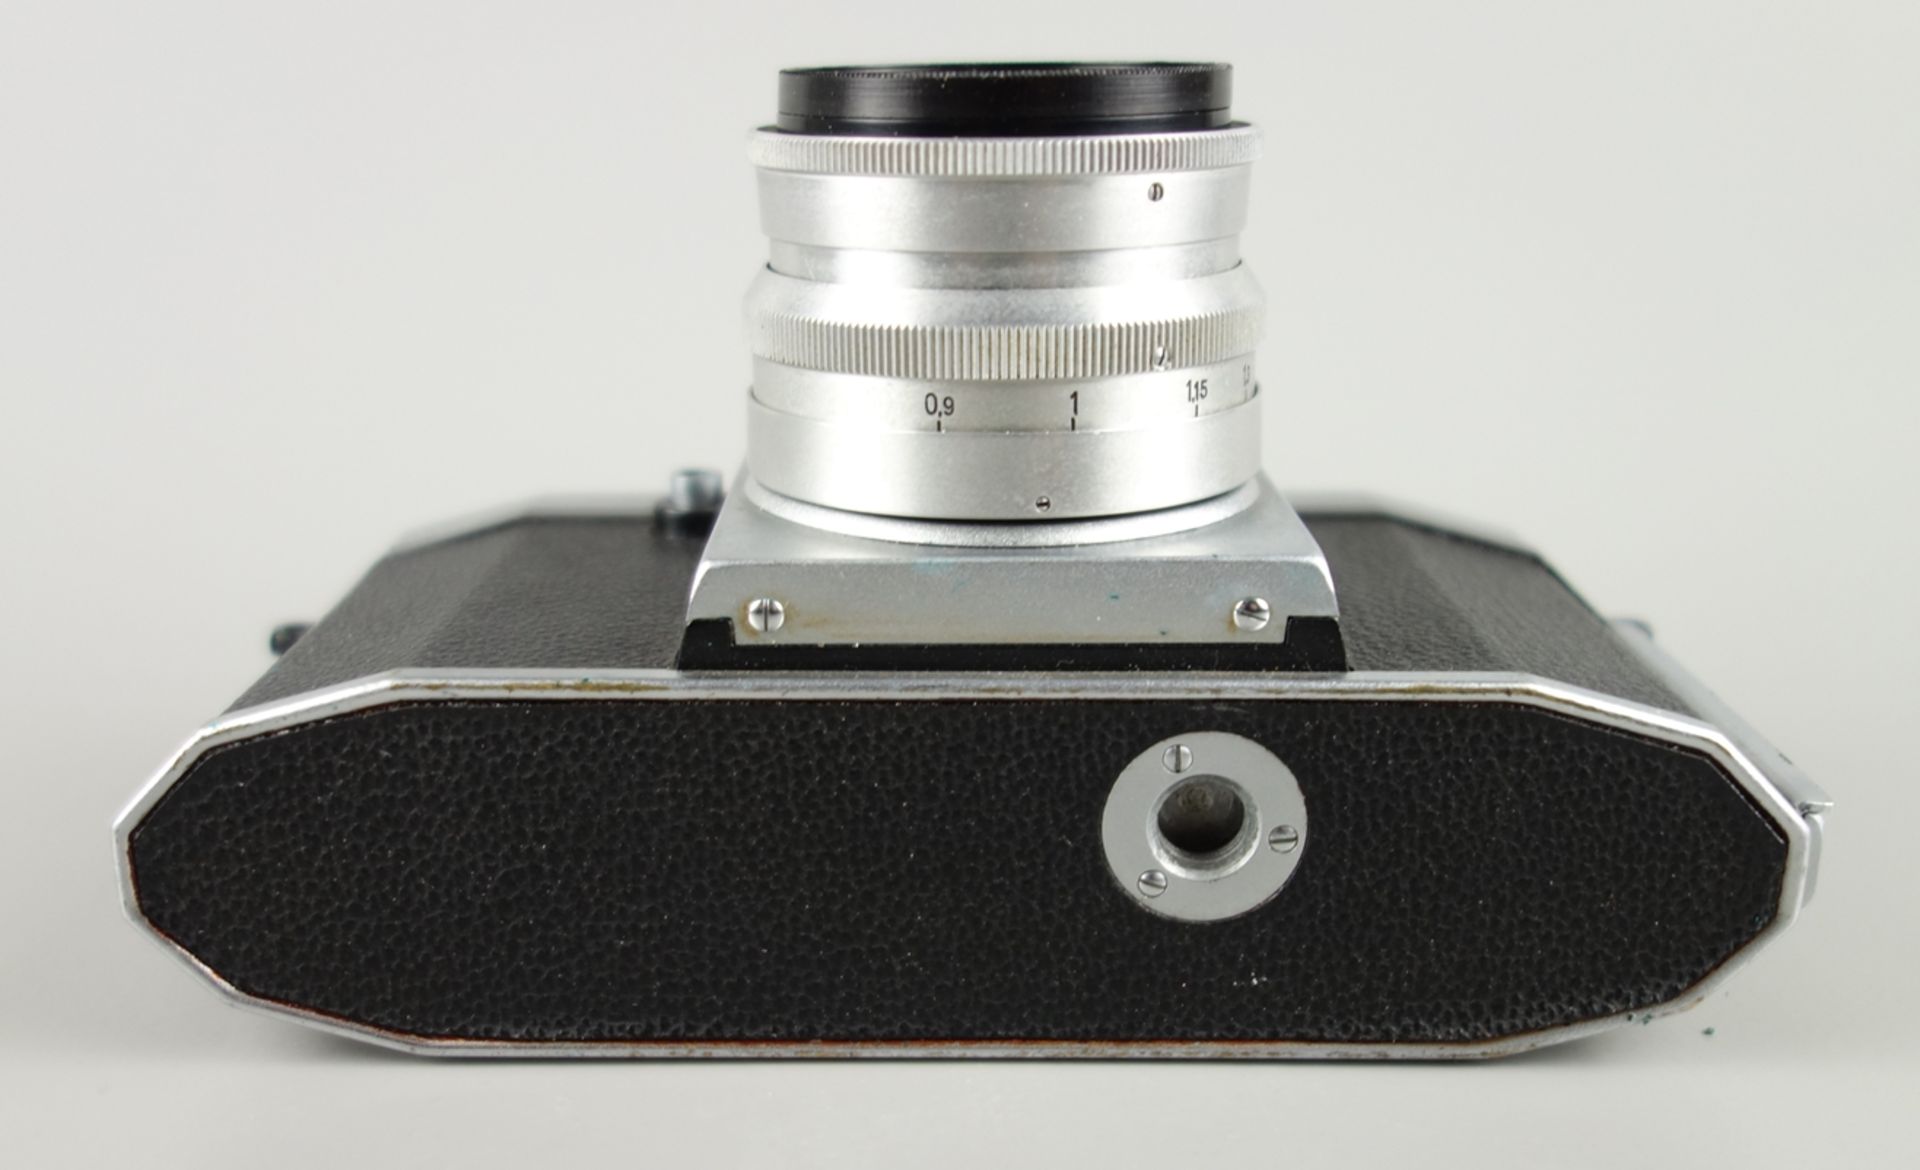 Kleinbildkamera "Praktica" mit Objektiv Carl Zeiss Jena, Biotar 1:2 f=58mm - Bild 3 aus 4